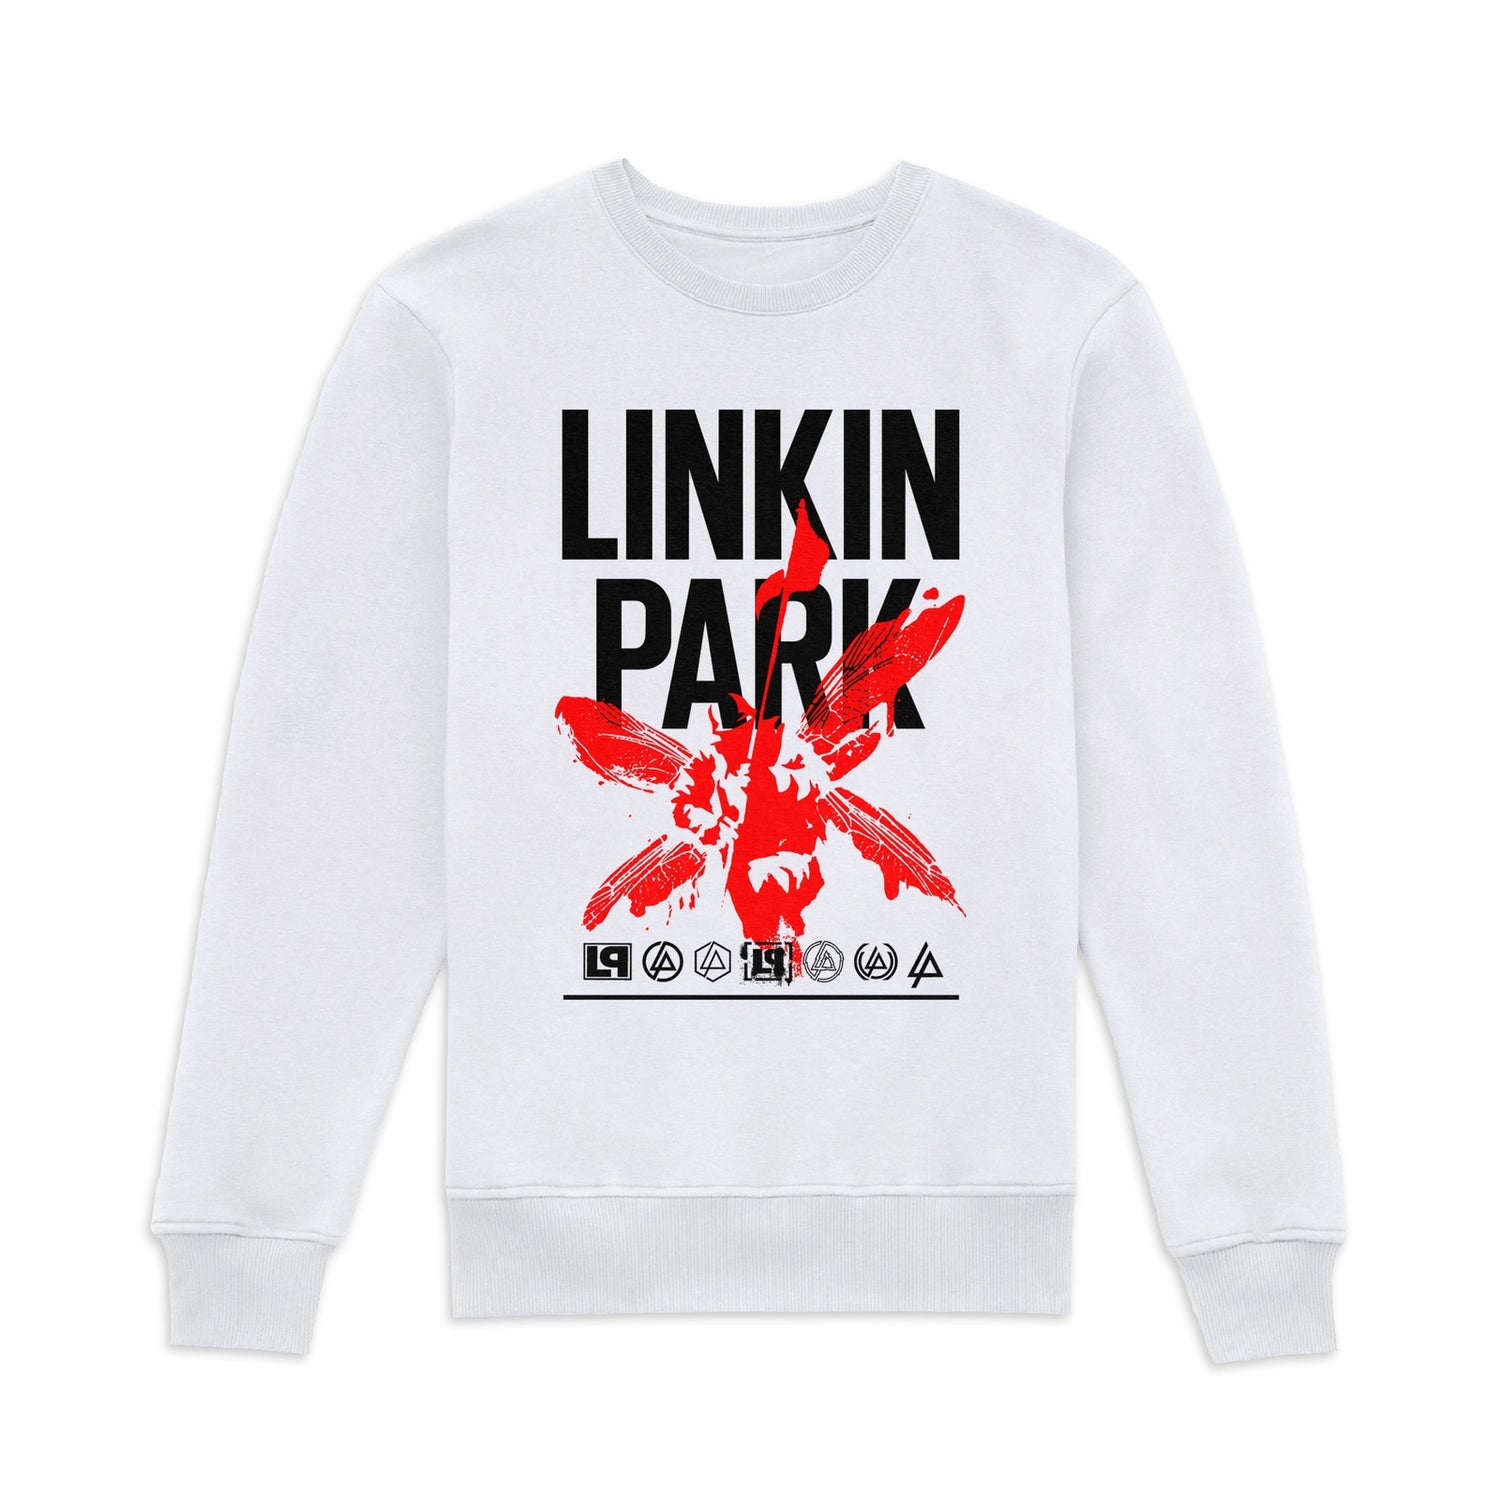 Linkin Park Poster Sweatshirt - White